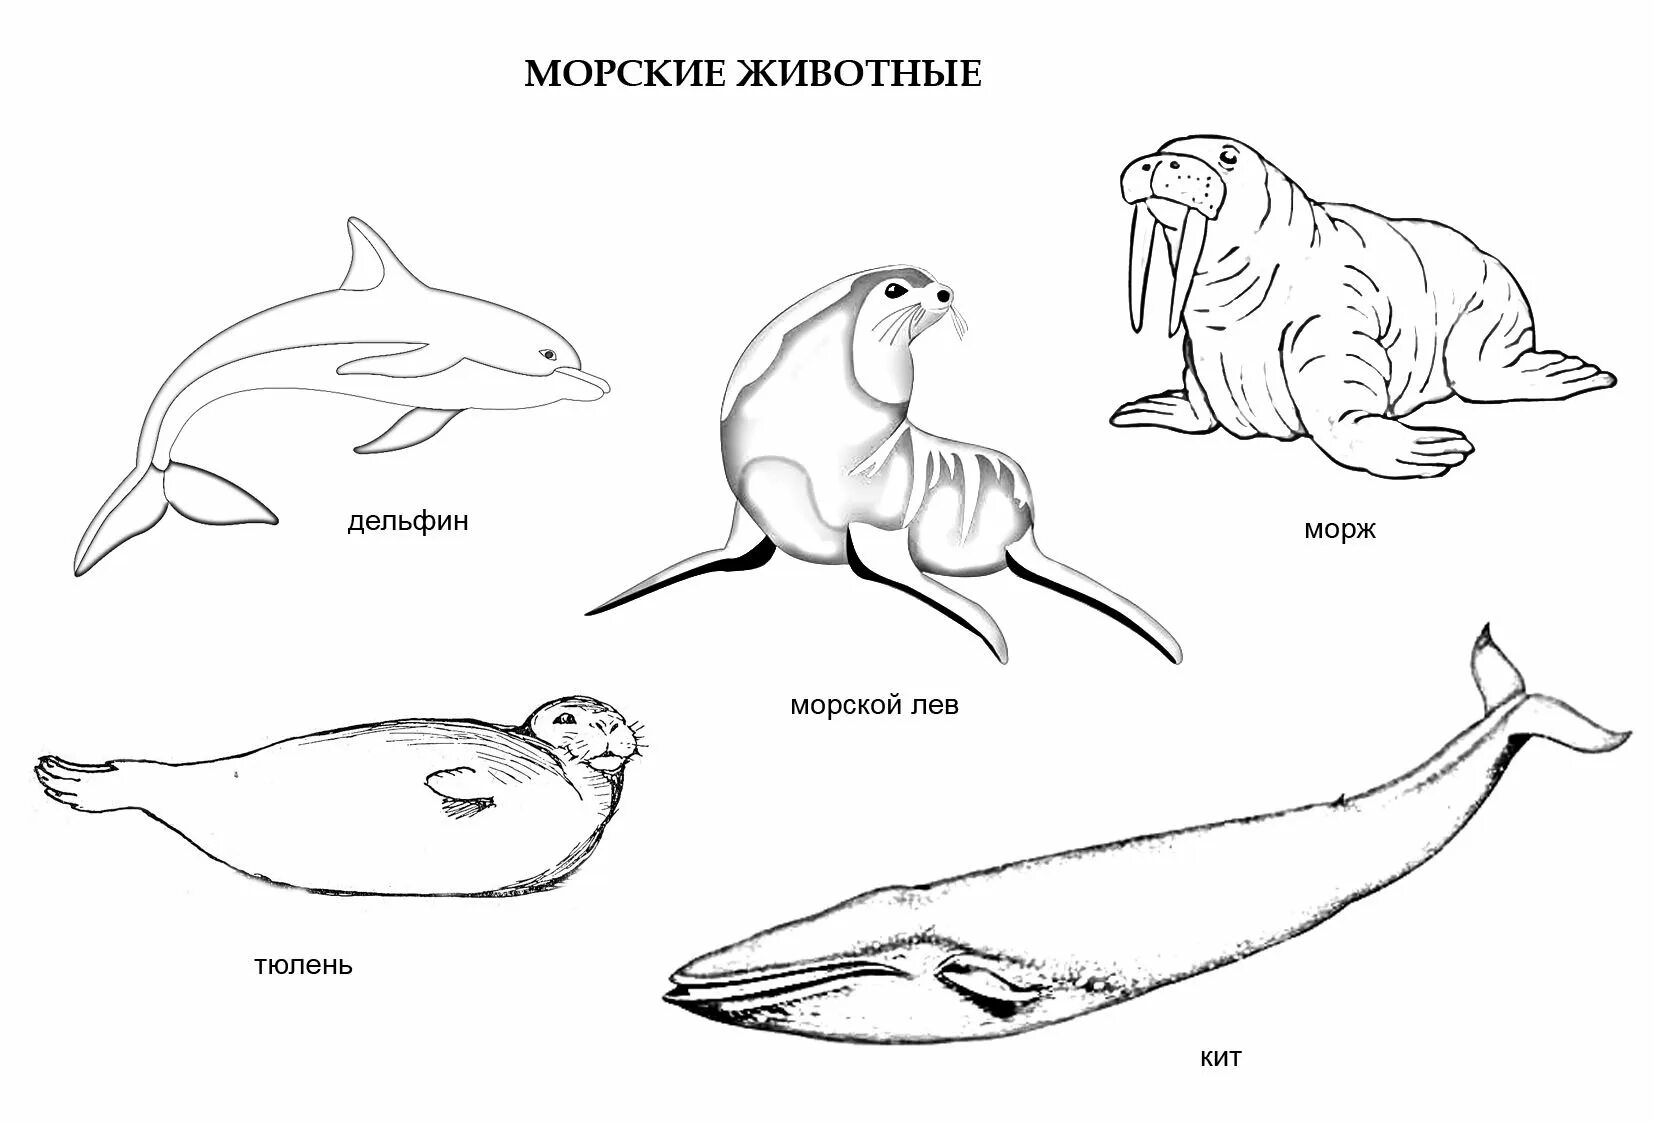 Раскраска морские обитатели. Морские млекопитающие раскраска. Рисунки морских животных. Морские обитатели картинки для детей раскраски. Сравните образ жизни тюленя и кита